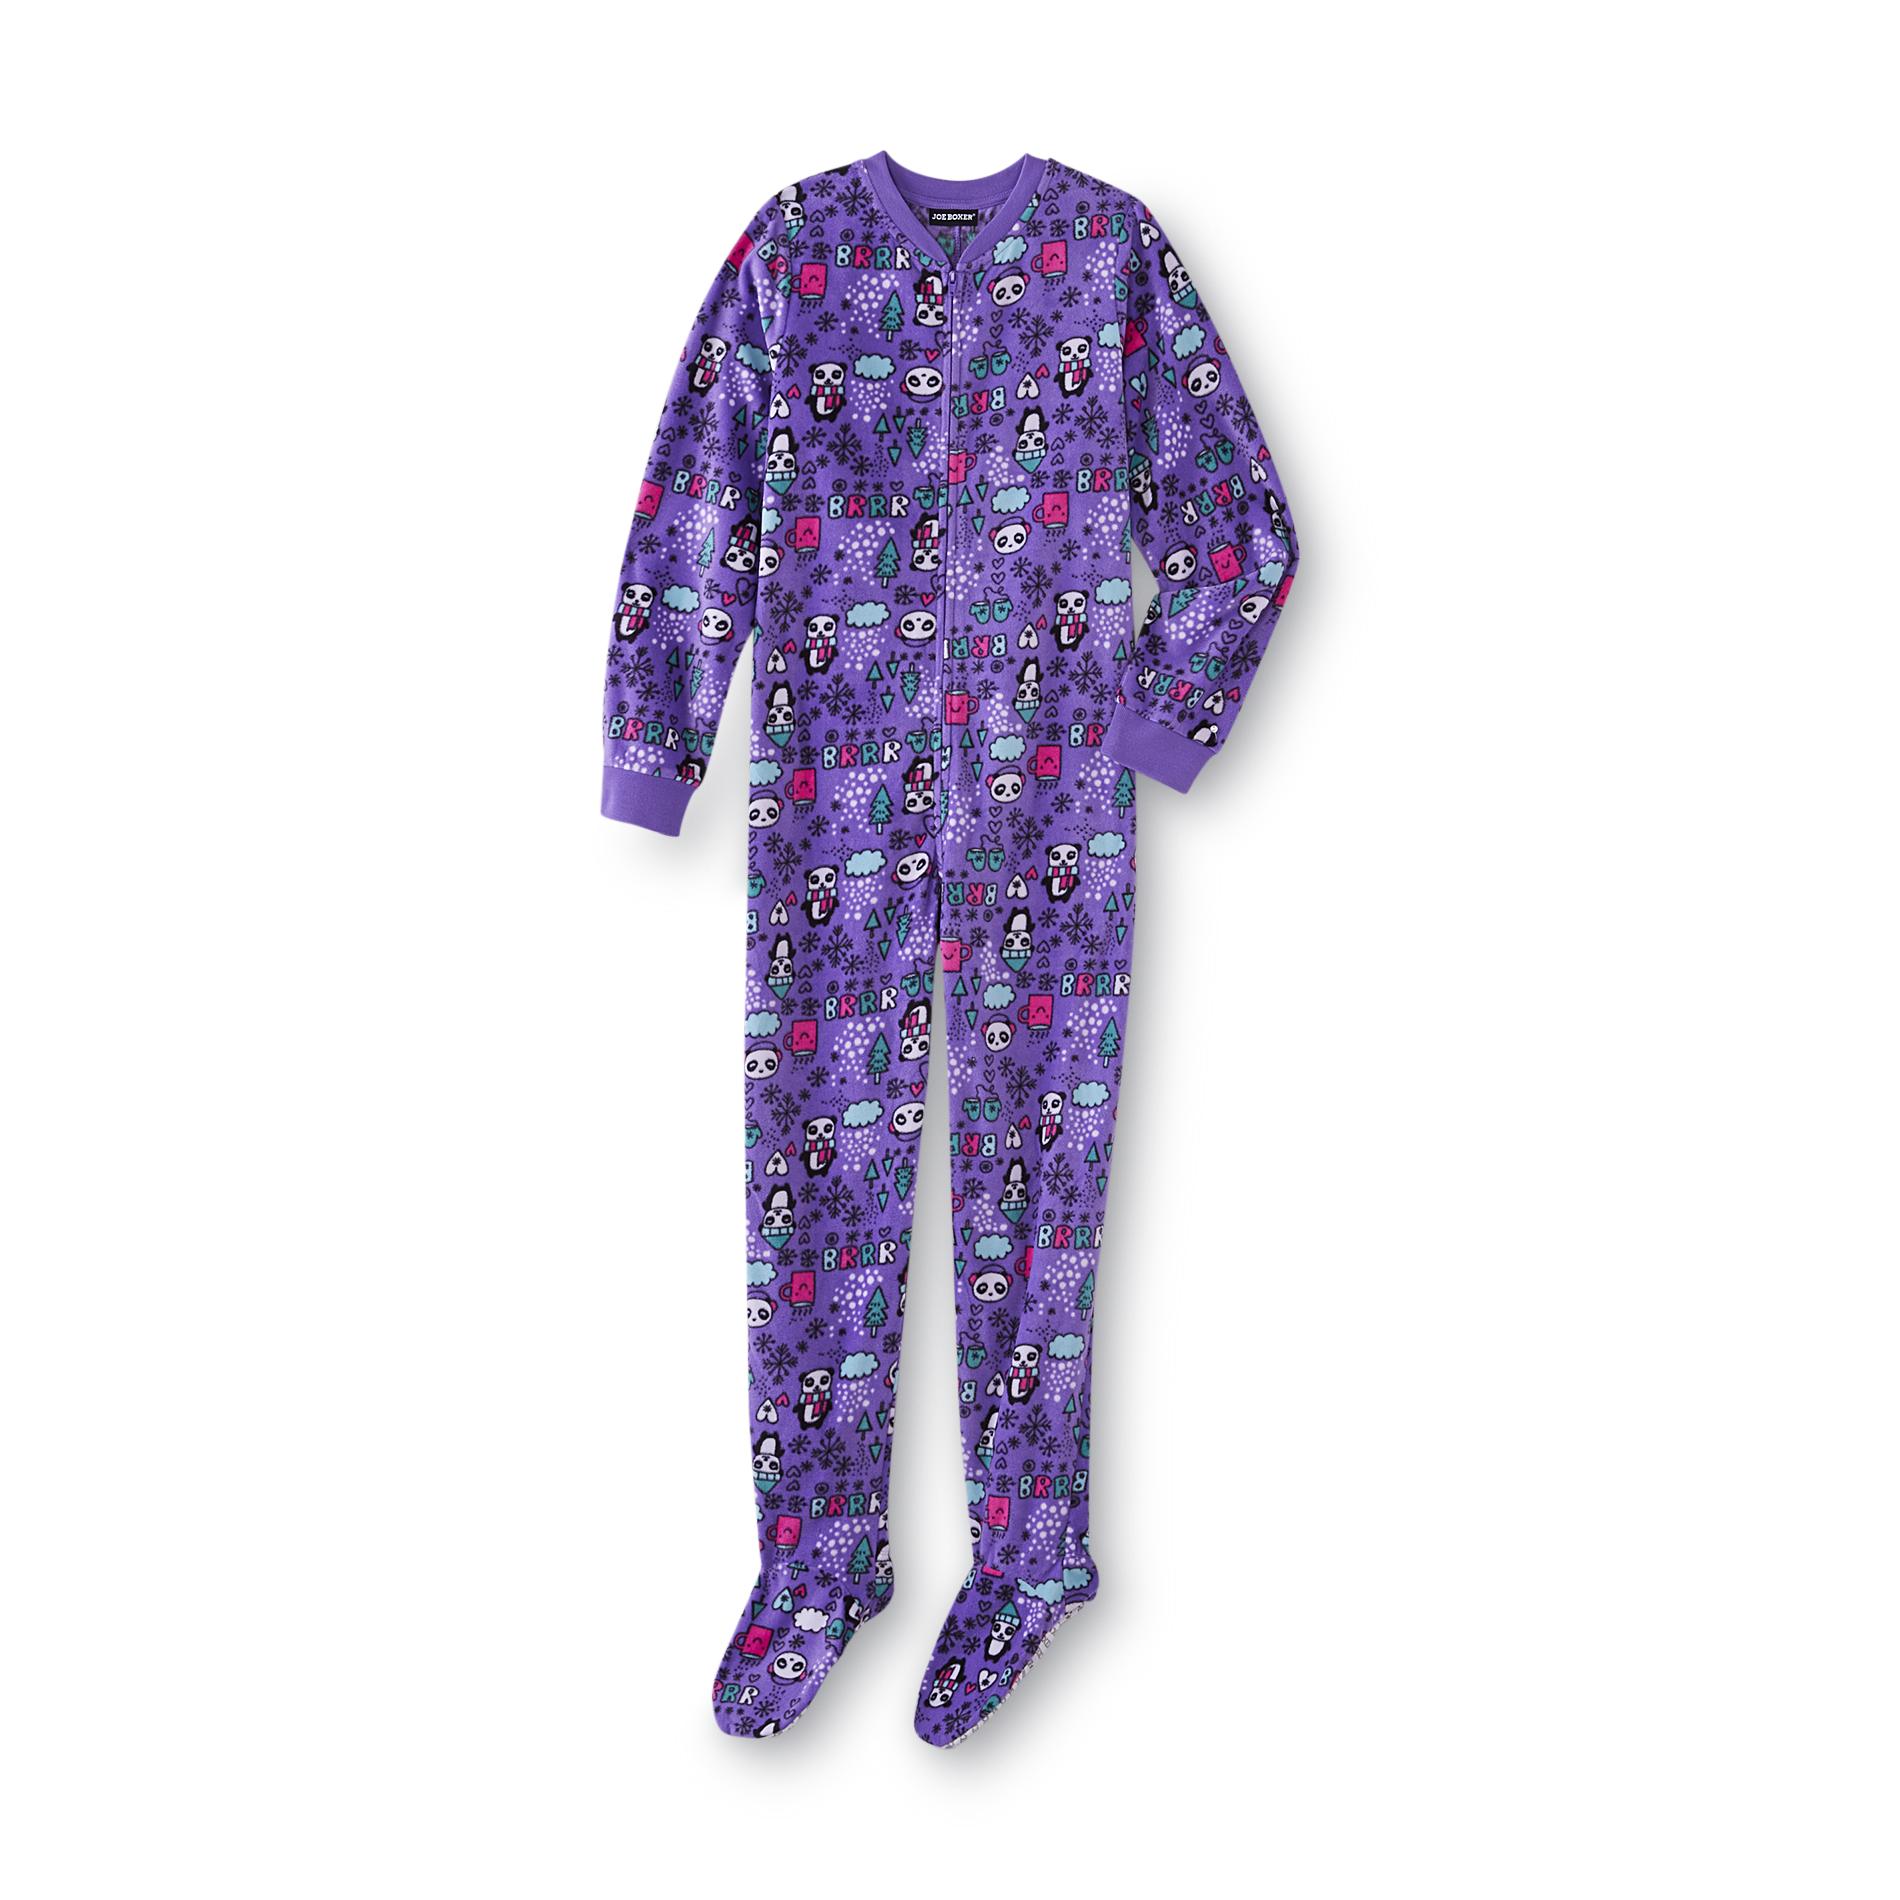 Joe Boxer Girl's Fleece Footed Pajamas - Pandas